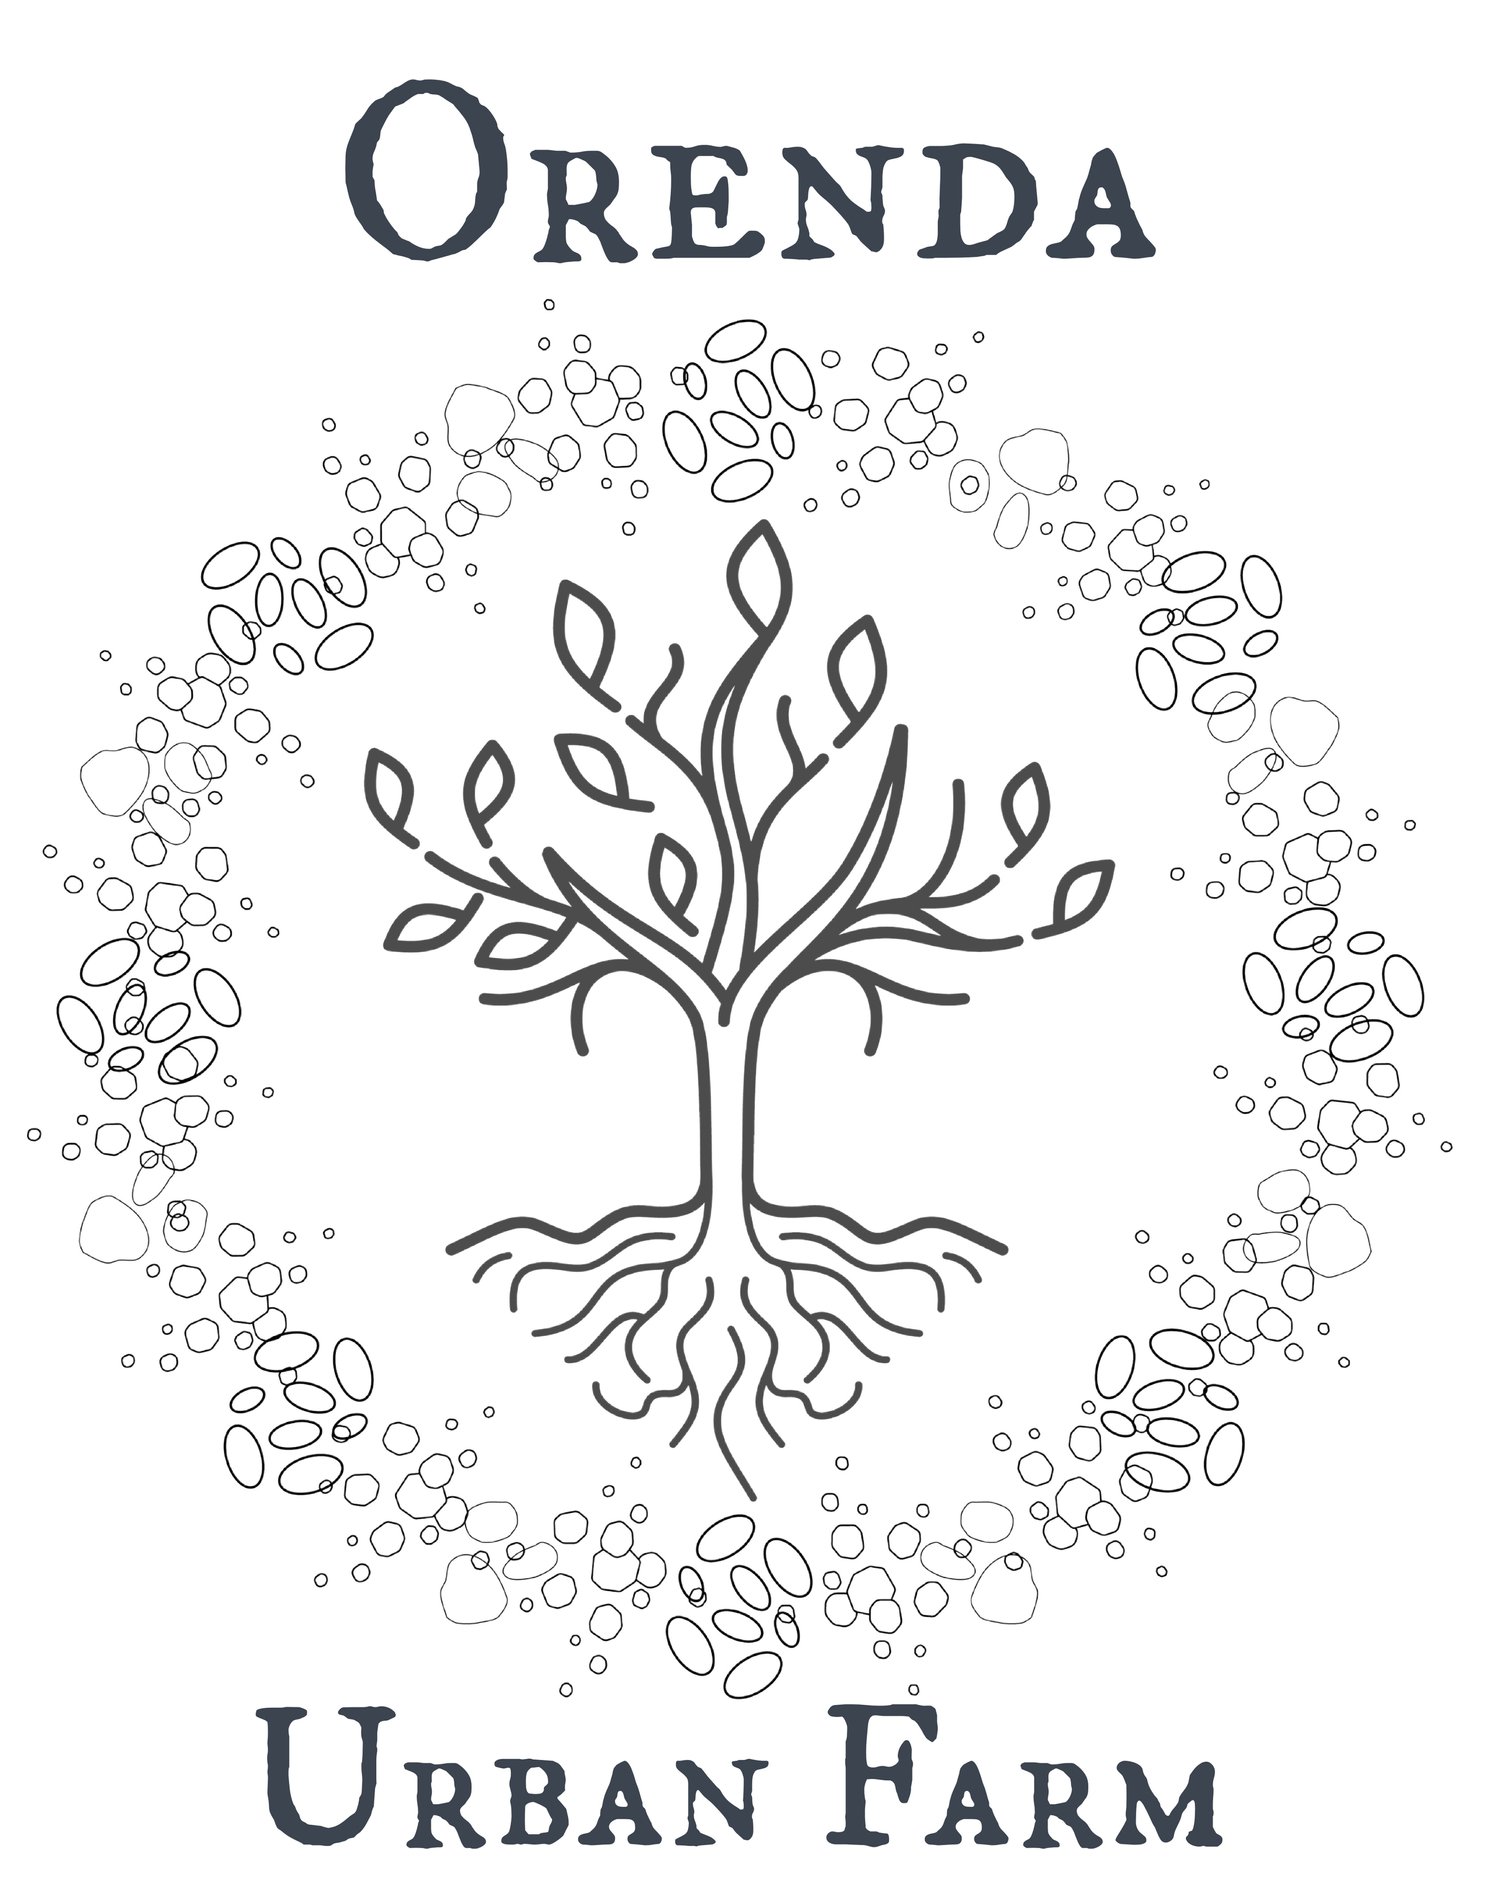 Orenda Urban Farm